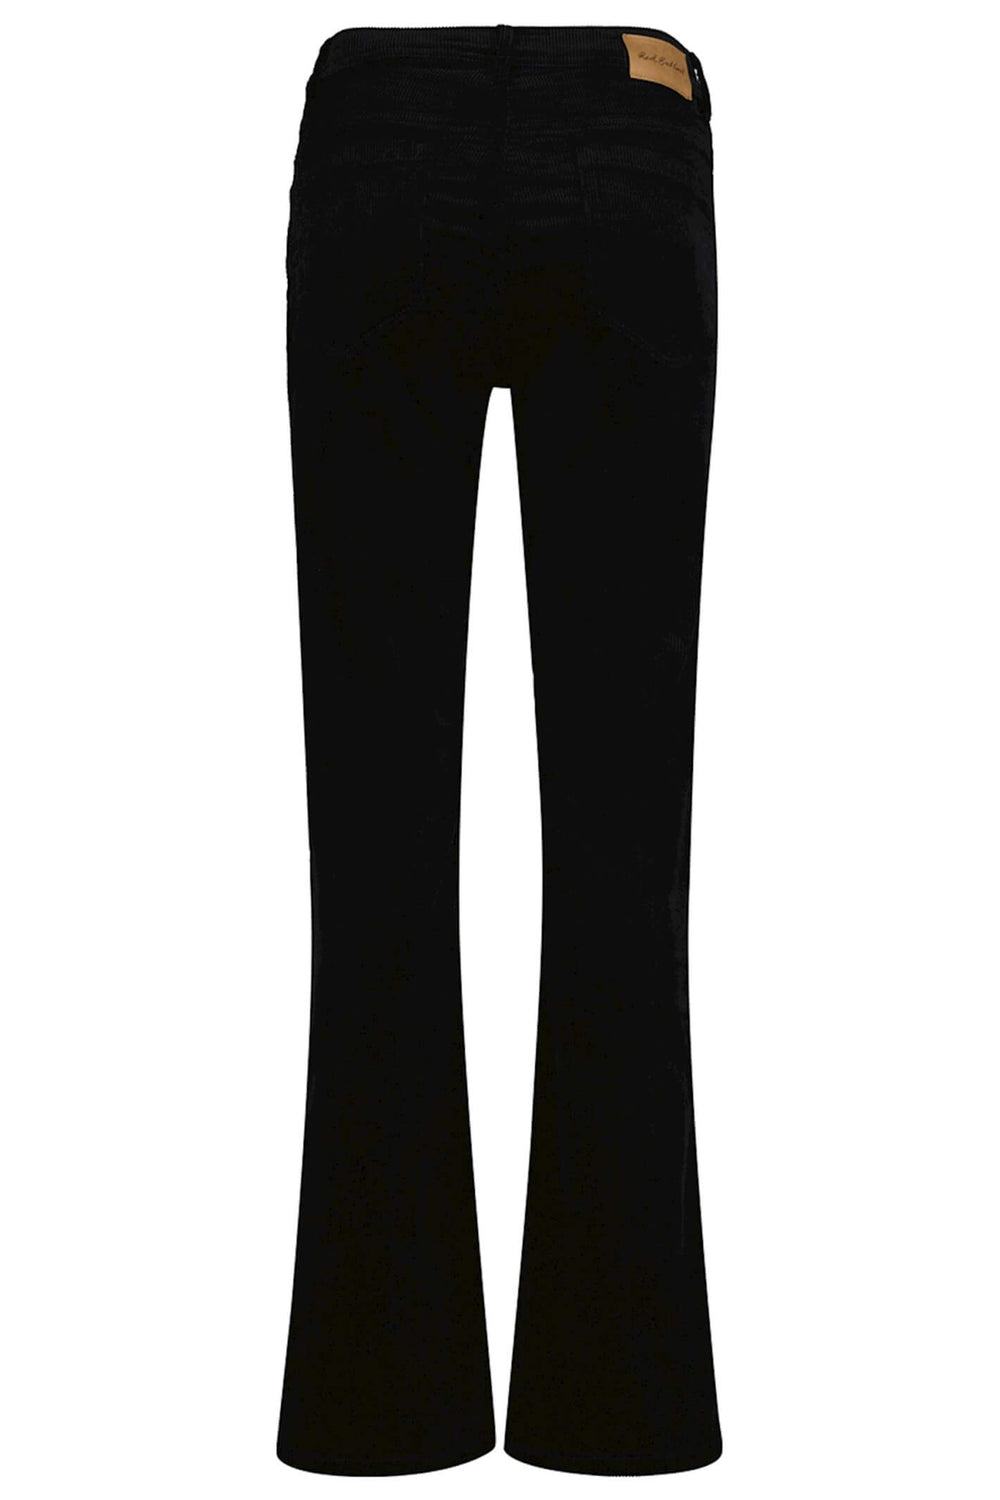 Red Button SRB4053 Bibette Black Corduroy Flared Trousers - Olivia Grace Fashion